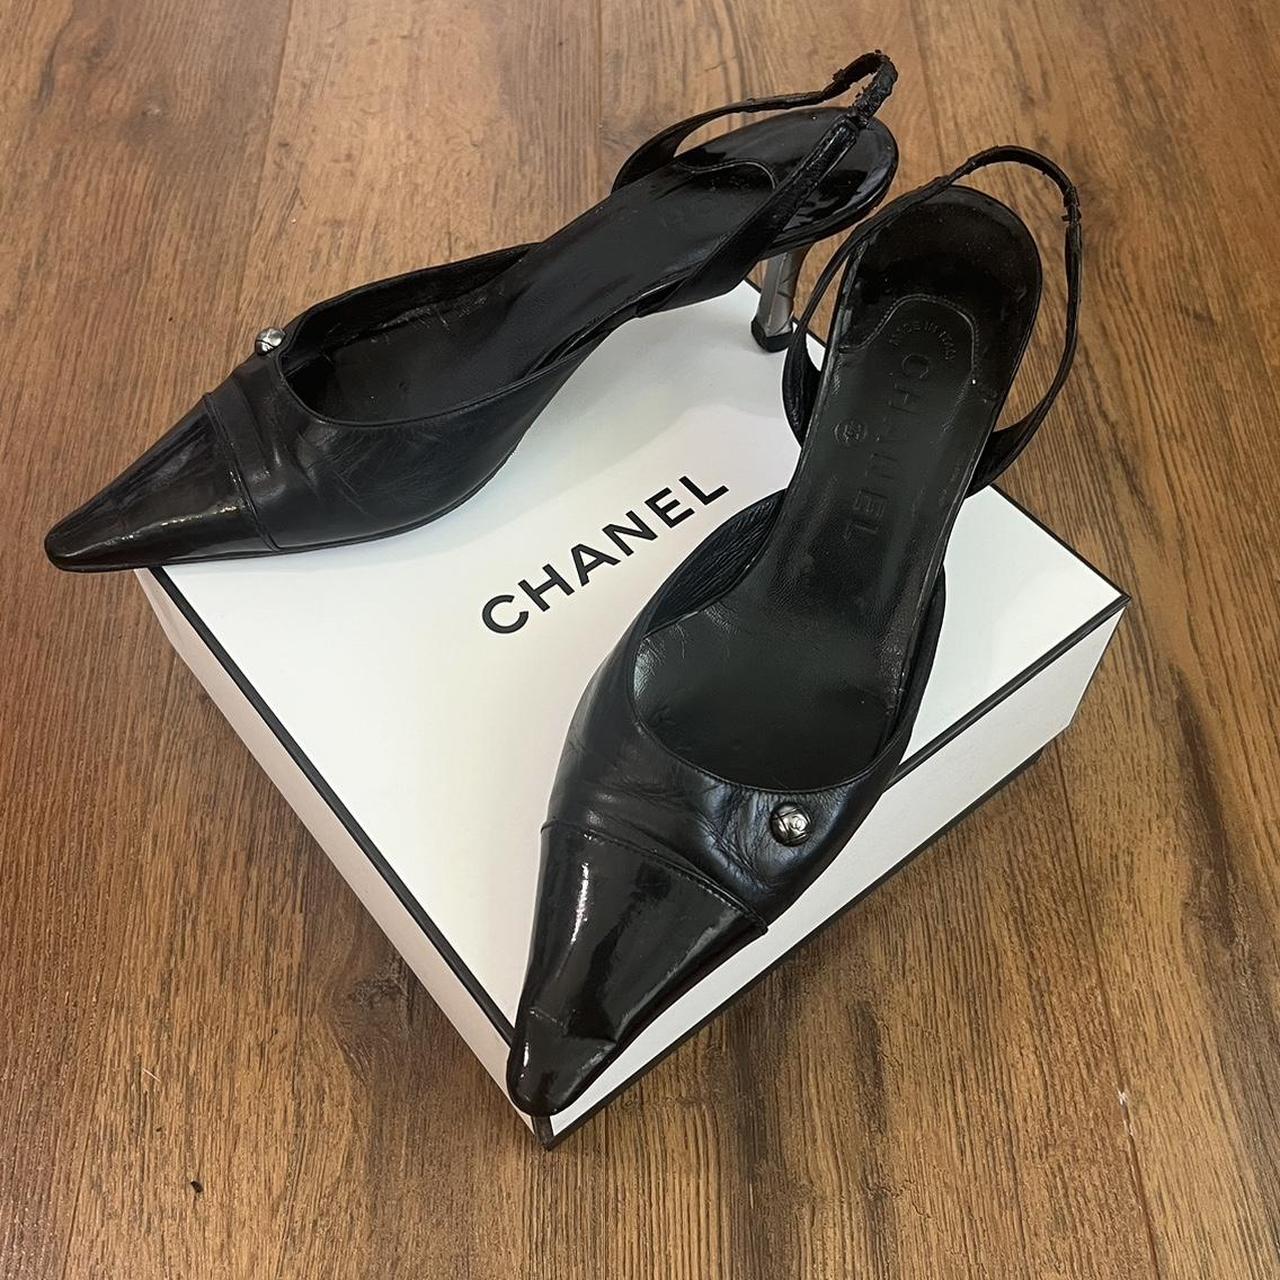 Chanel Light Pink/Black Leather CC Cap Toe Kitten Heel Mules Size 8.5/39 -  Yoogi's Closet